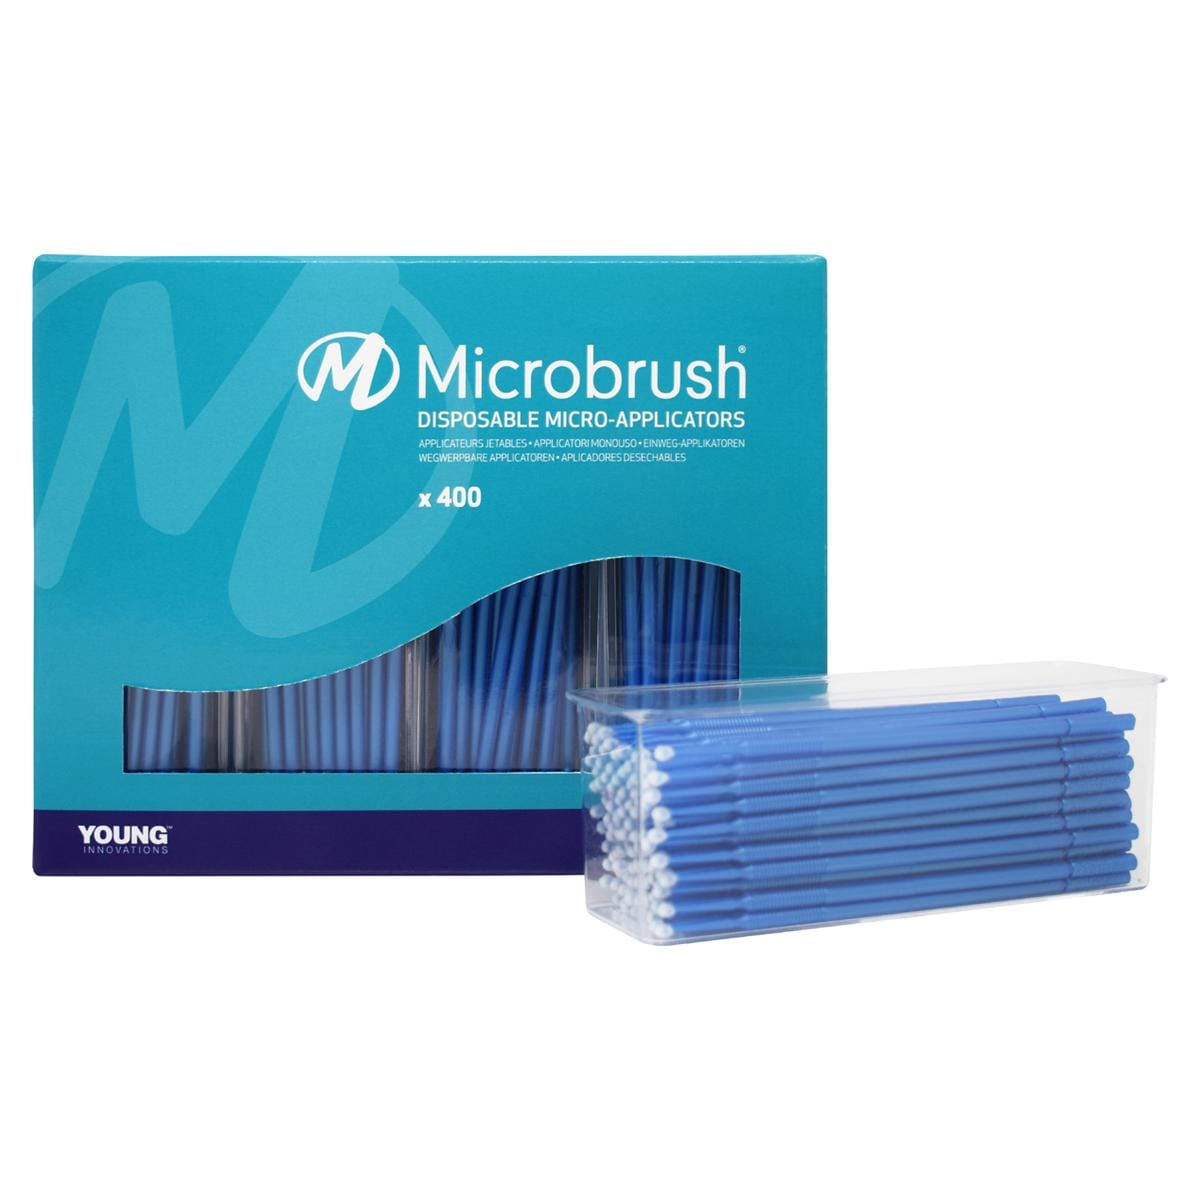 Microbrush® Plus Applikatoren - Nachfüllpackung - Blau, regulär, Ø 2,0 mm, Packung 400 Stück